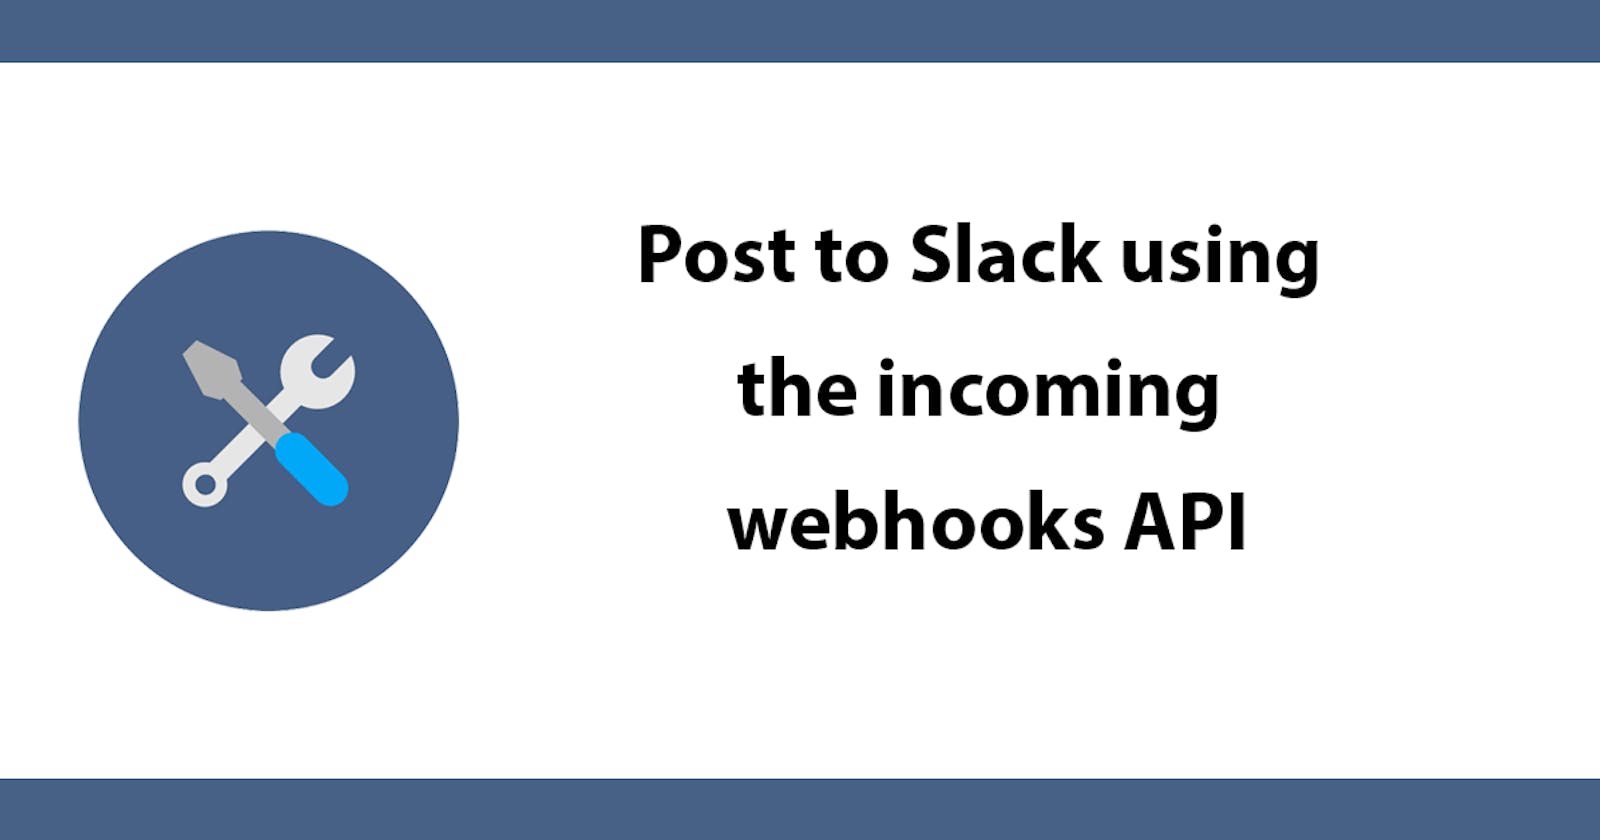 Post to Slack using the incoming webhooks API